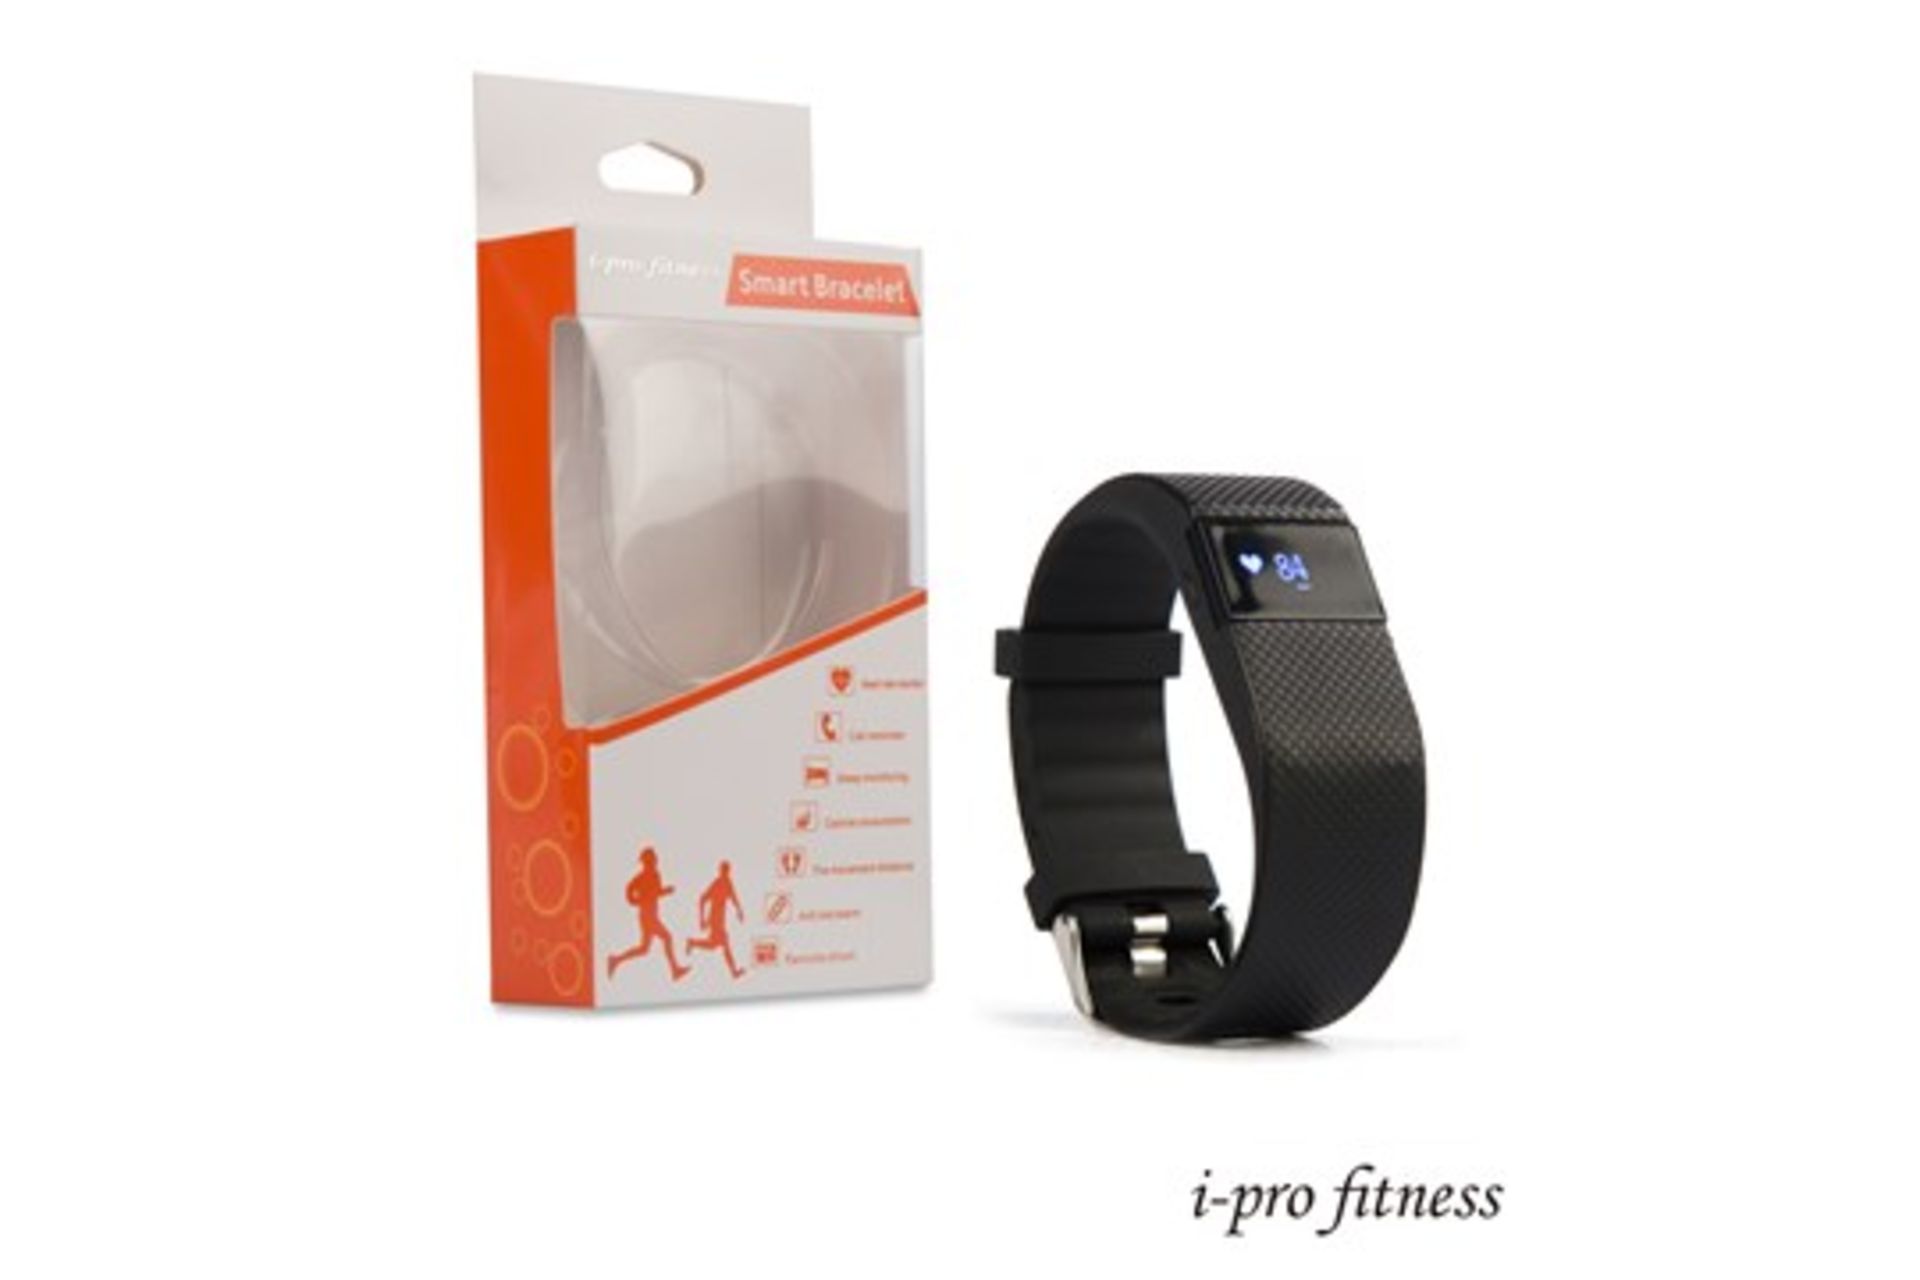 Trade Lot 50 X Units Fitness Tracker I-Pro Fitness, Bluetooth 4.0 Sports Smart Bracelet*** Fitness - Image 7 of 8